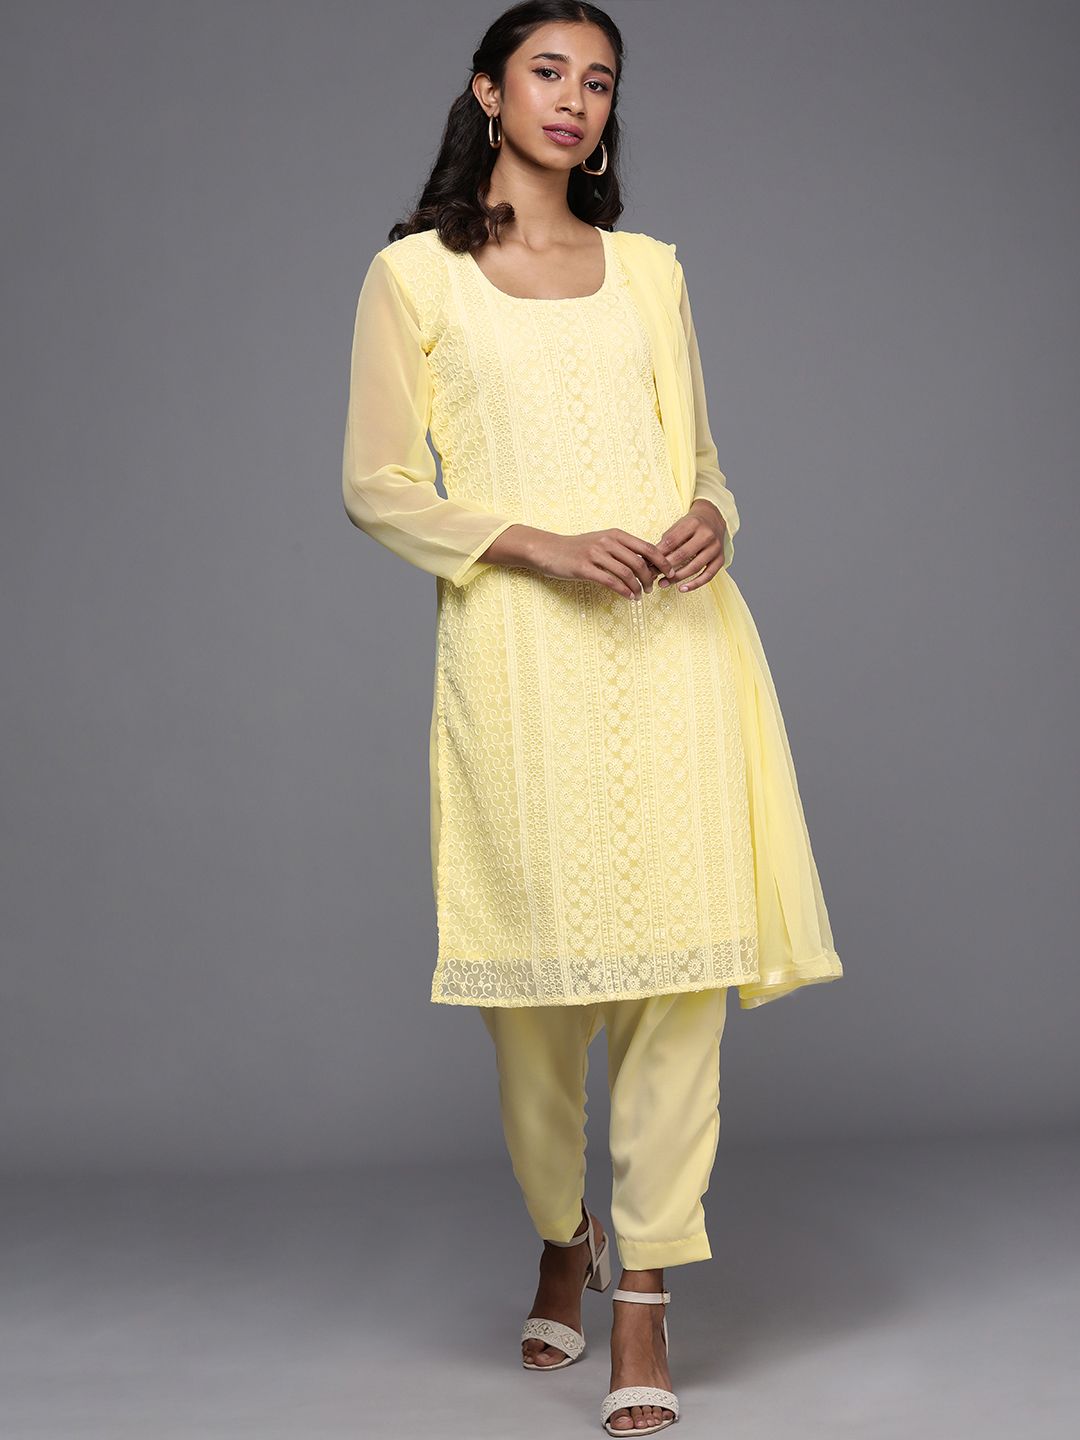 Mitera Yellow Chikankari Embroidered Unstitched Dress Material Price in India